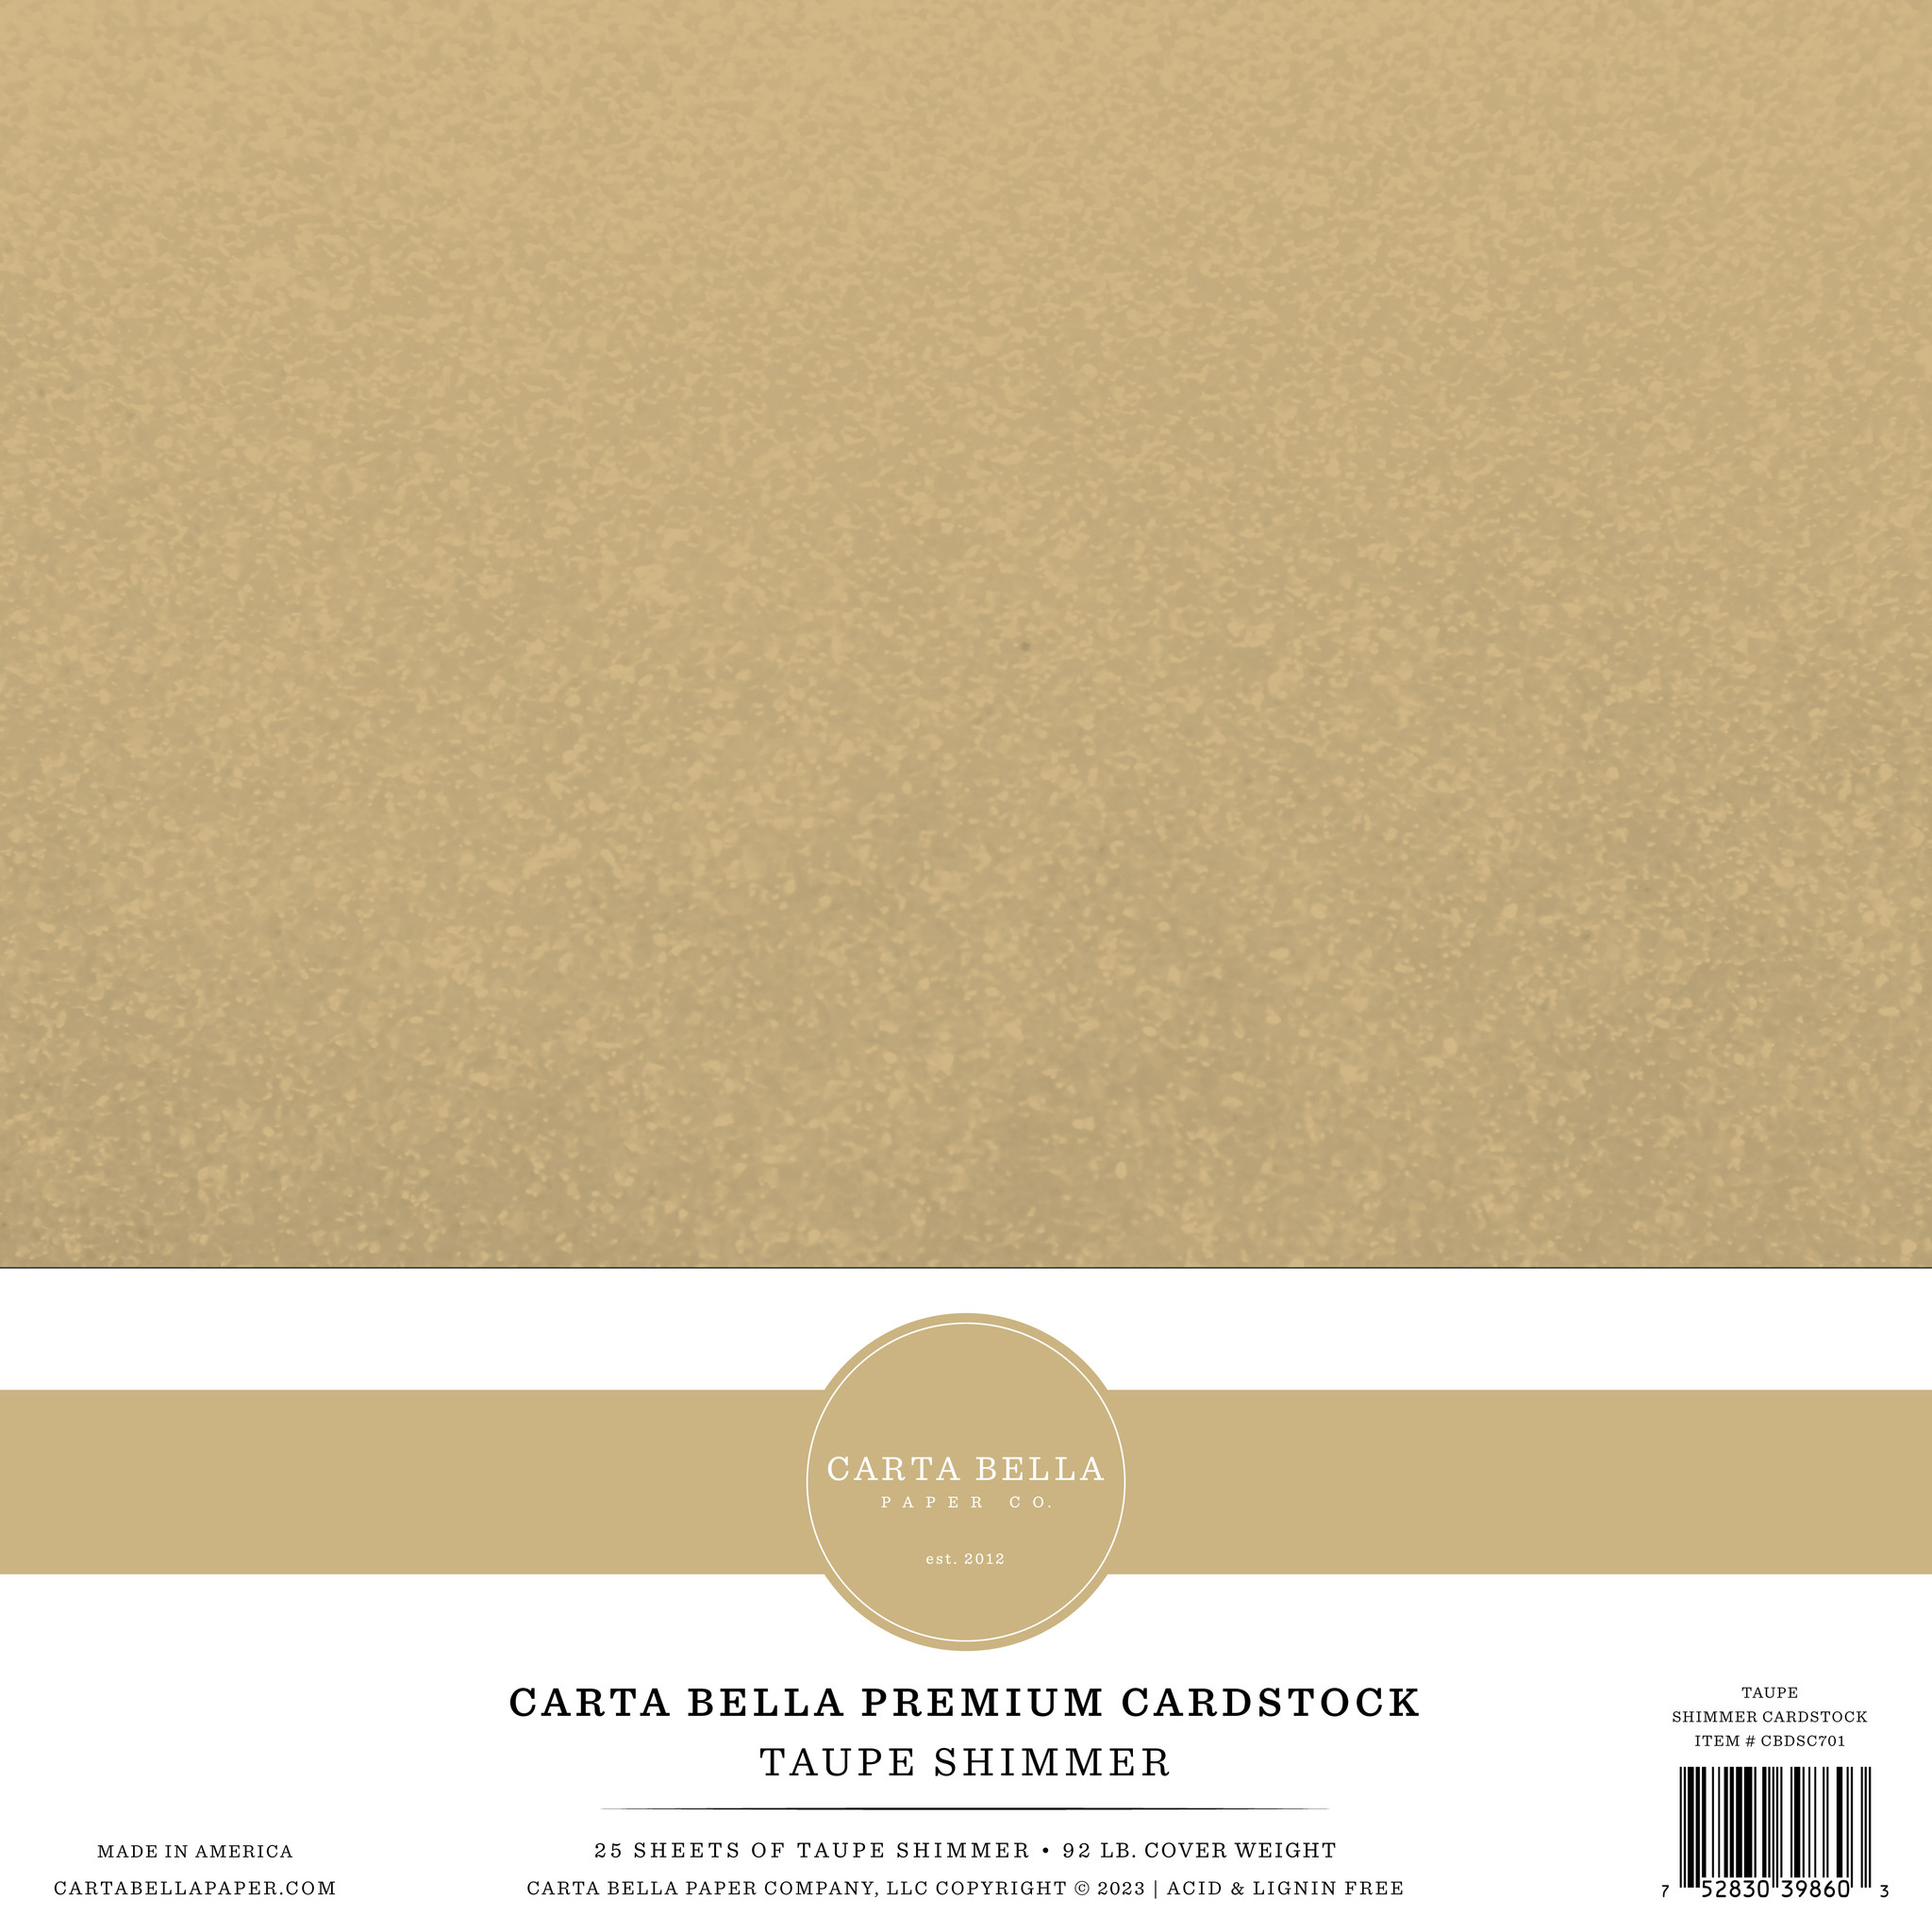 Cream Shimmer Cardstock - Echo Park Paper Co.